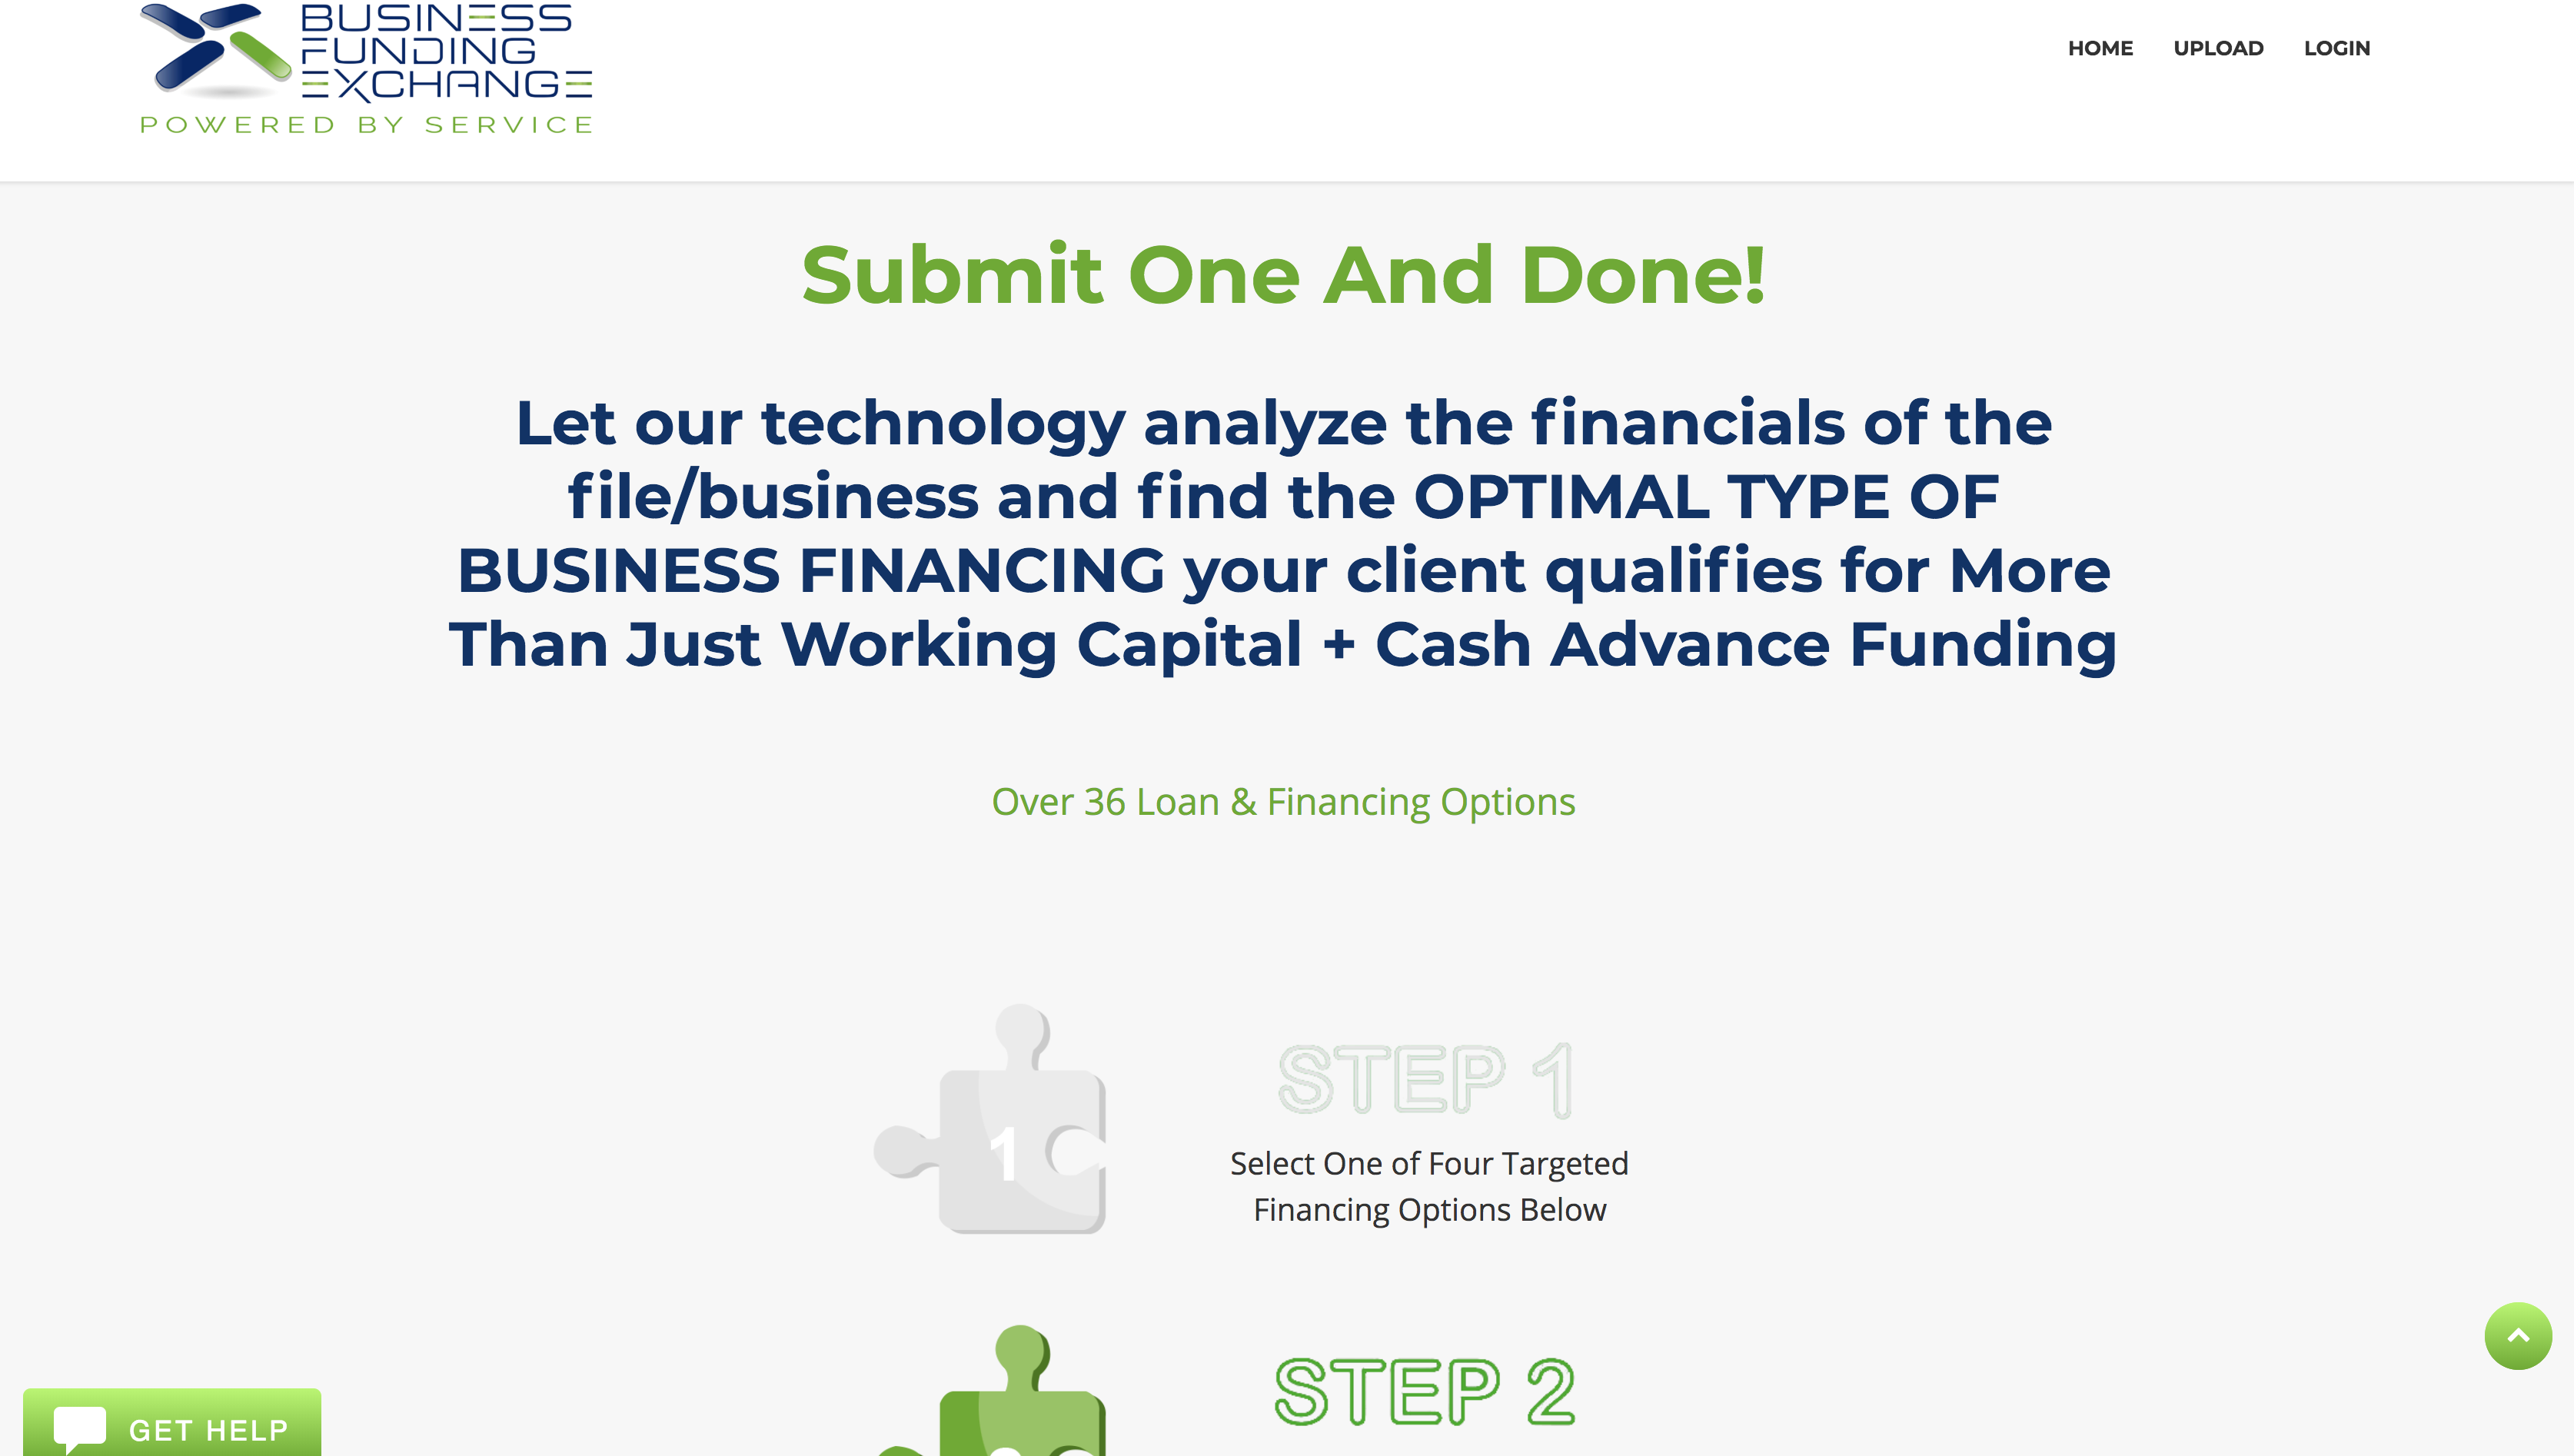 Business Funding Exchange Portal